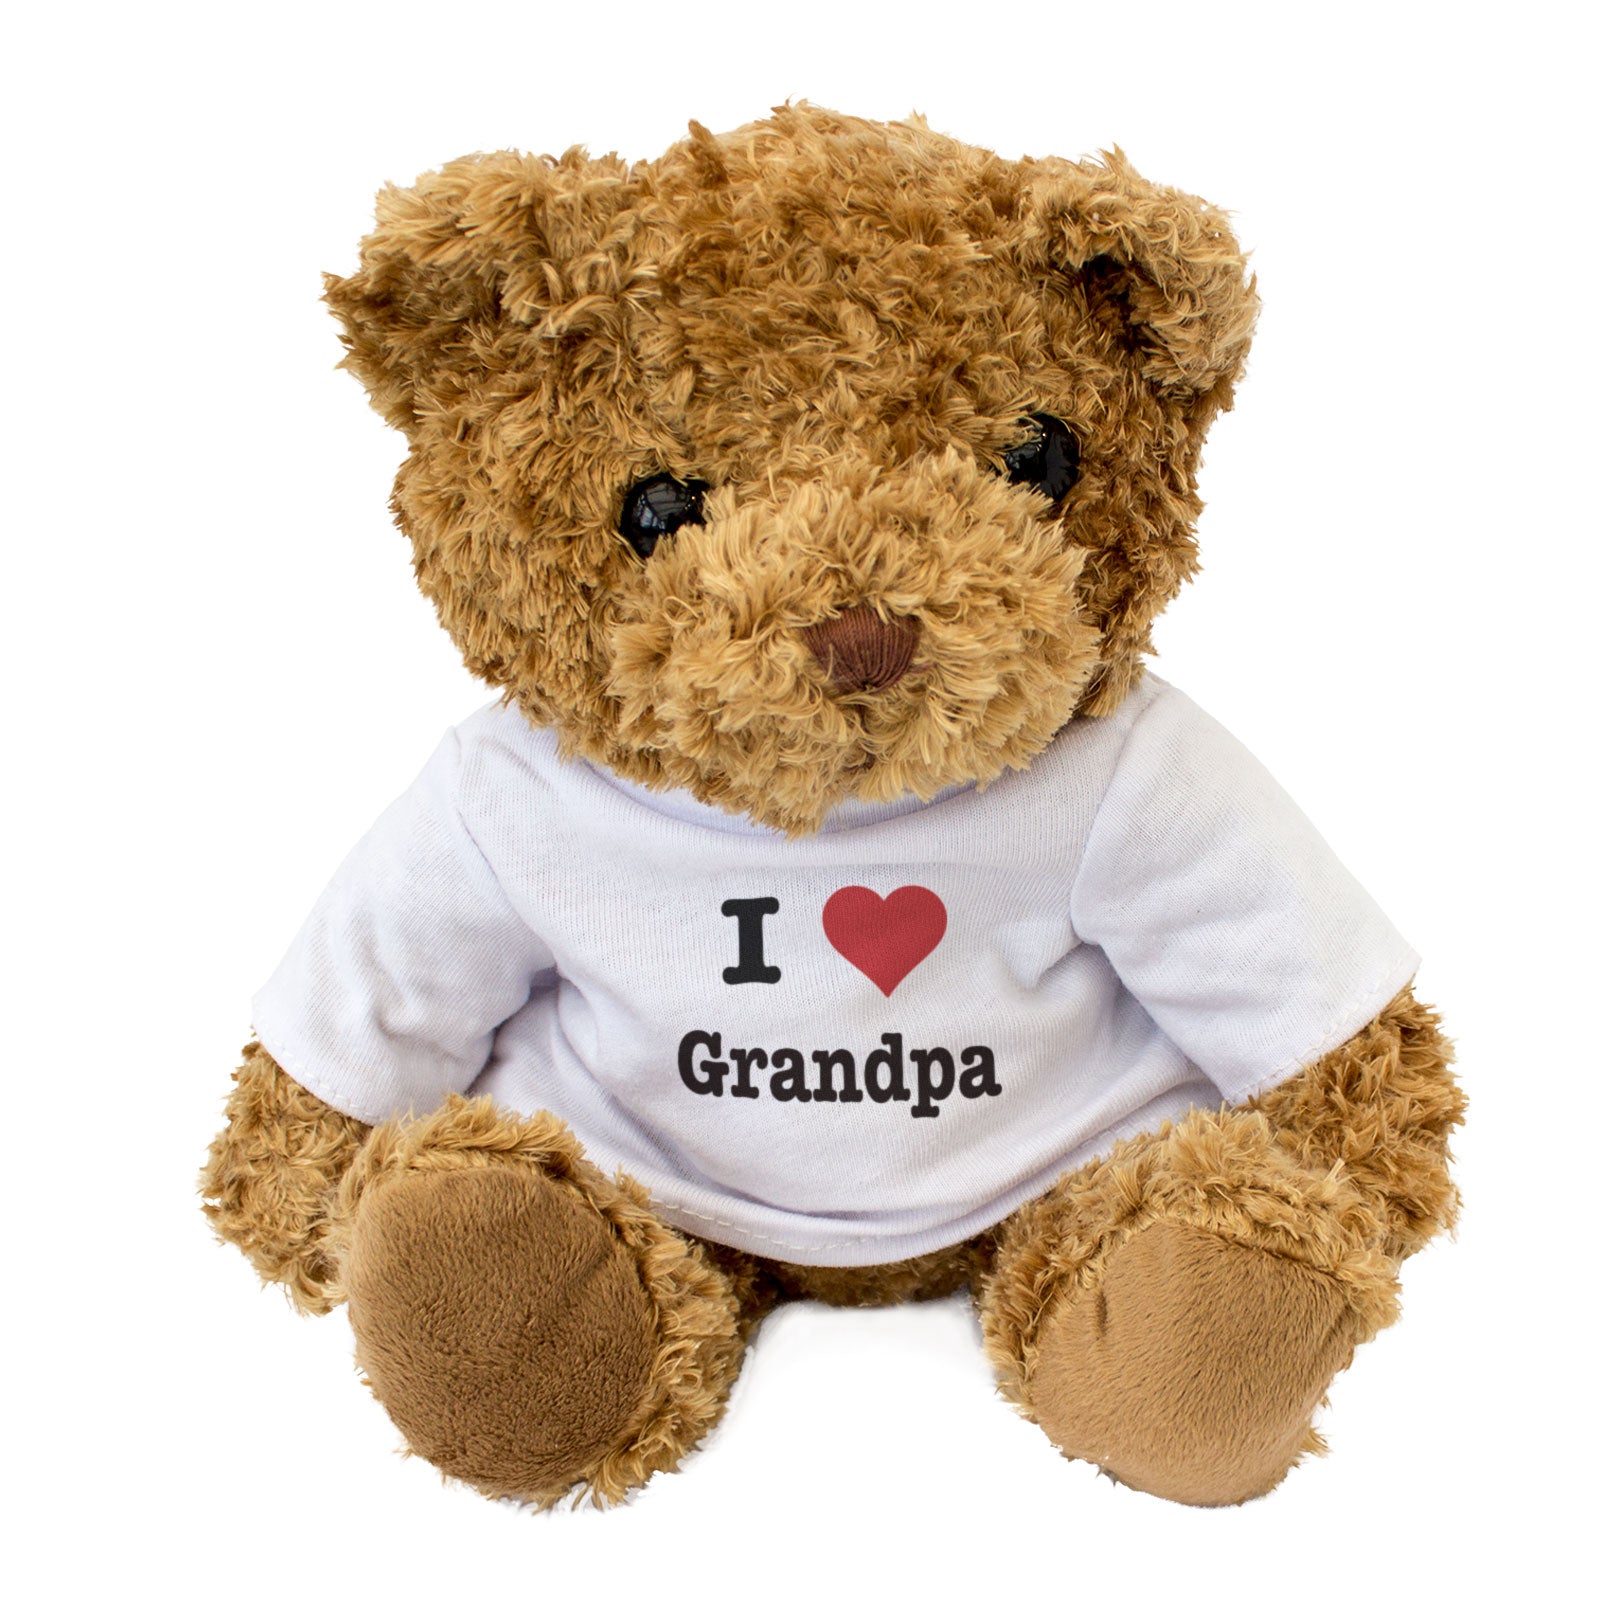 I LOVE GRANDPA - Teddy Bear